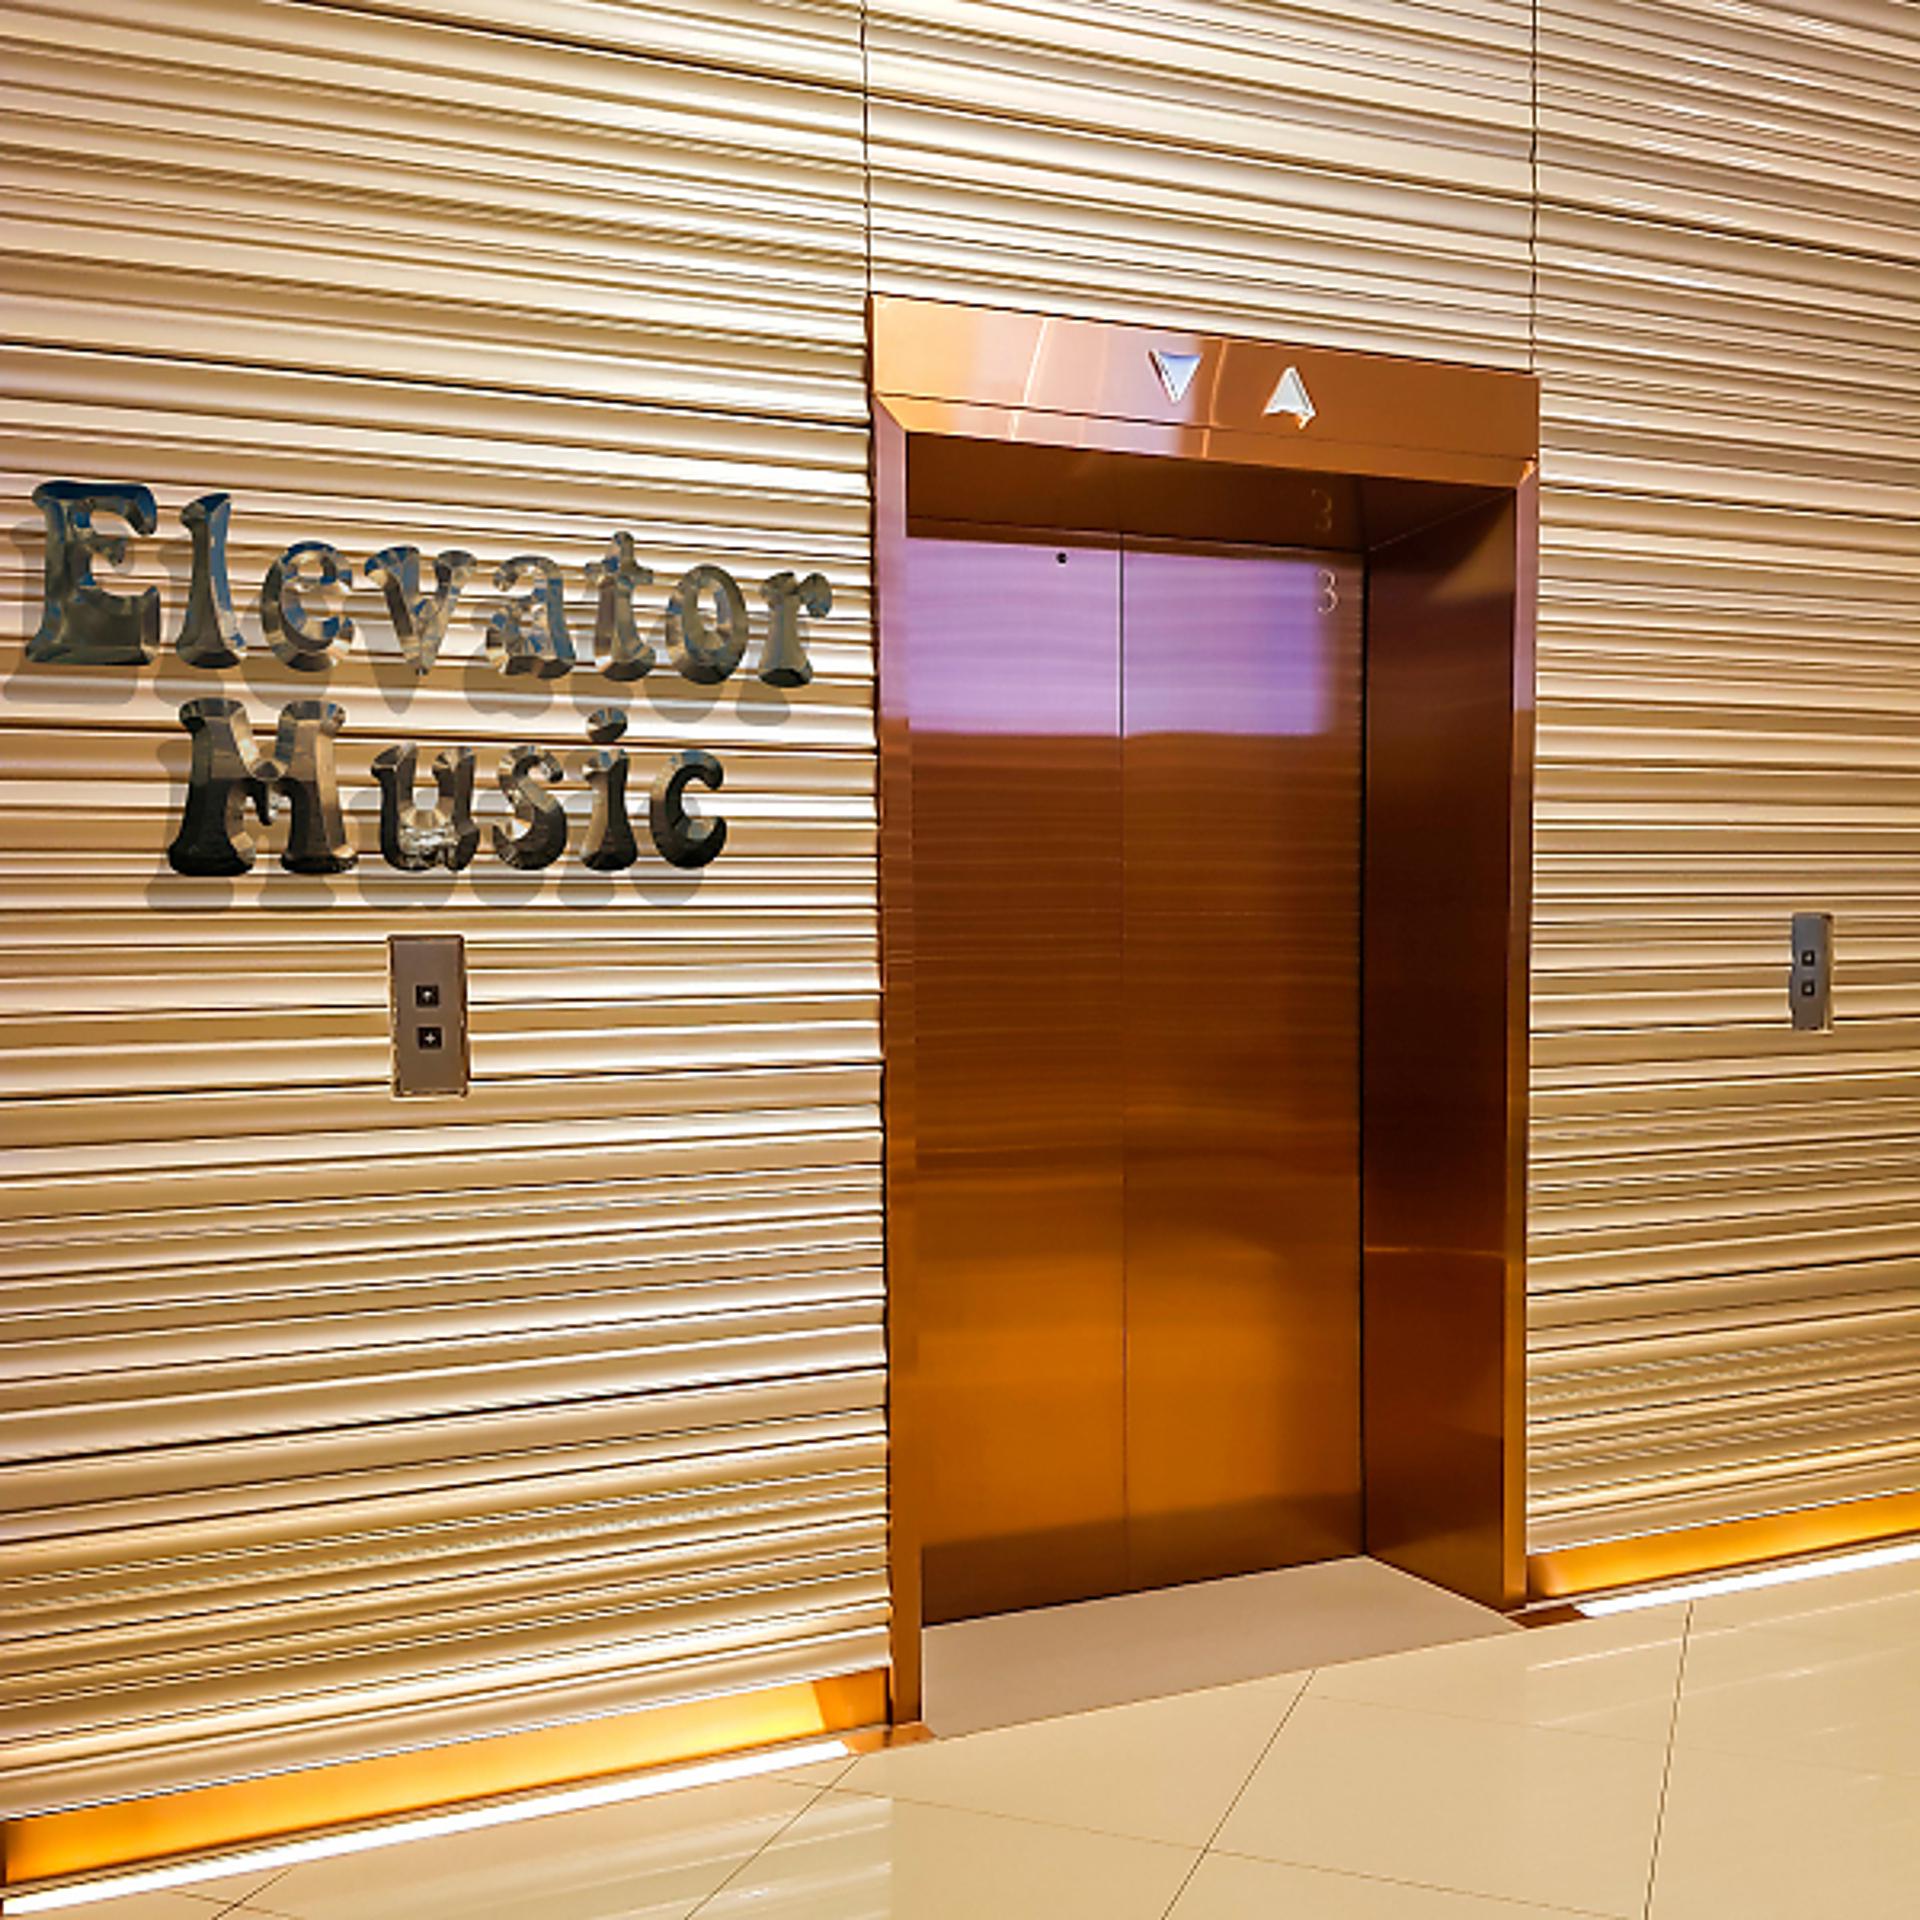 Постер альбома Elevator Music